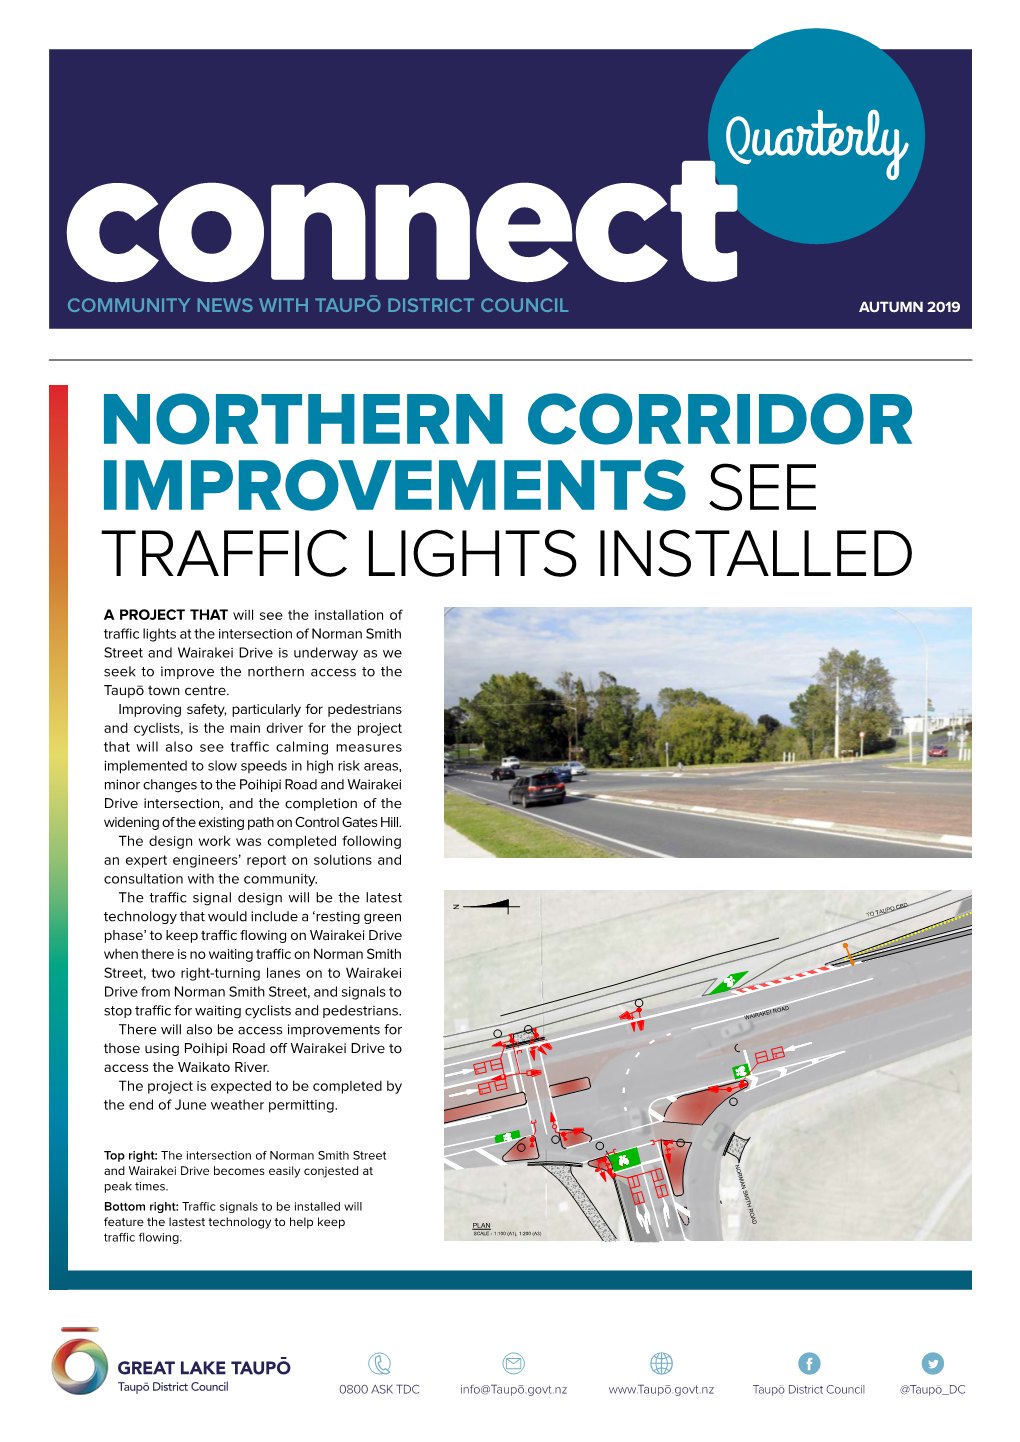 Northern Corridor Improvements See Traffic Lights Installed